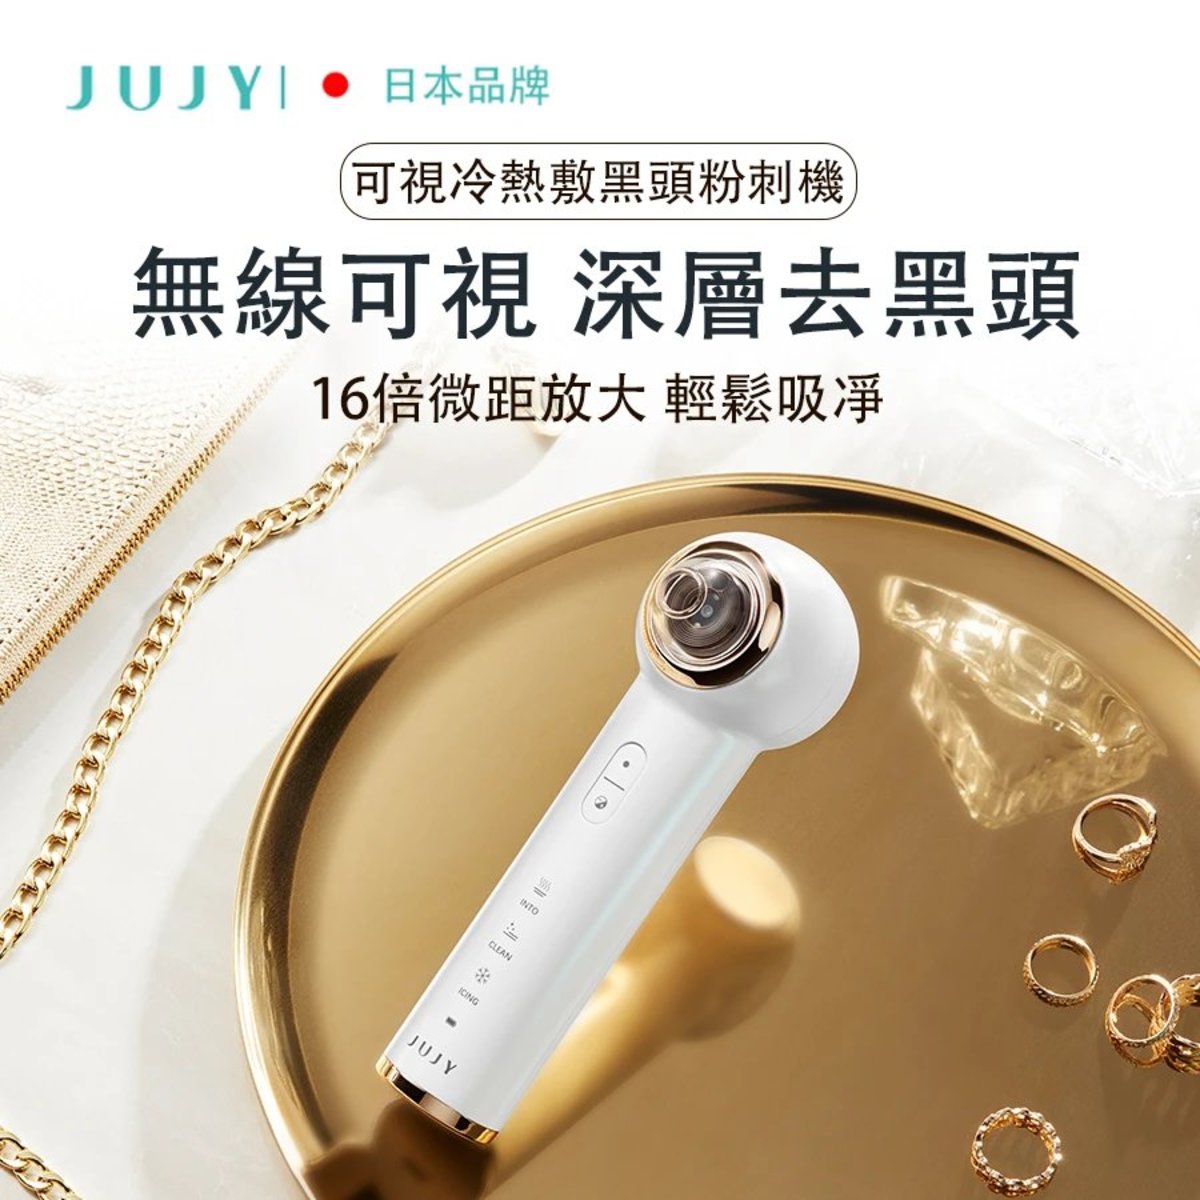 Jujy - Japan JUJY blackhead machine - visible hot and cold compress blackhead machine [Hong Kong licensed product]